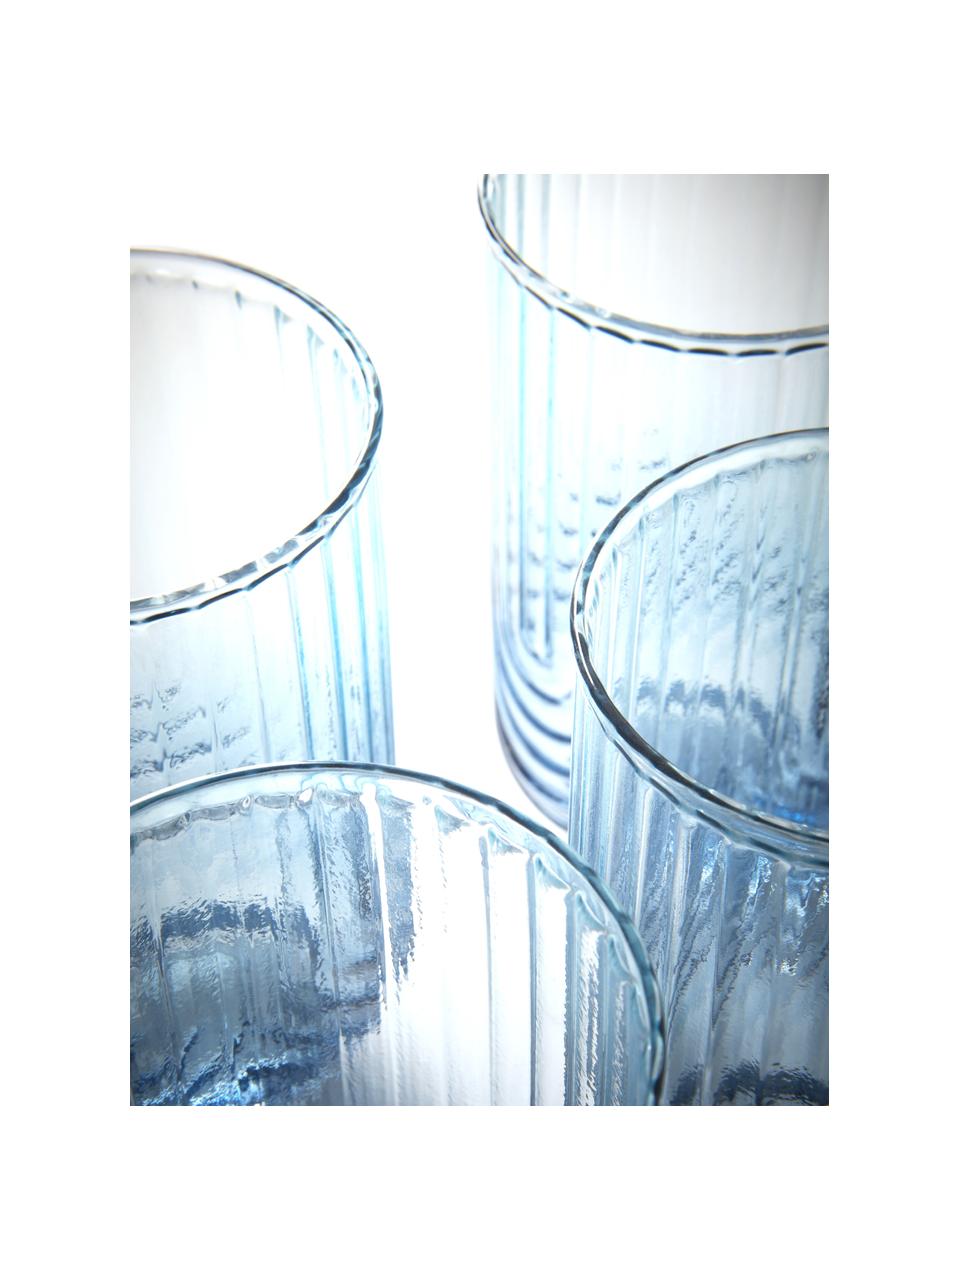 Waterglazen Imani met kleurverloop in blauw/transparant, 4 stuks, Glas, Blauw, transparant, Ø 8 x H 14 cm, 450 ml